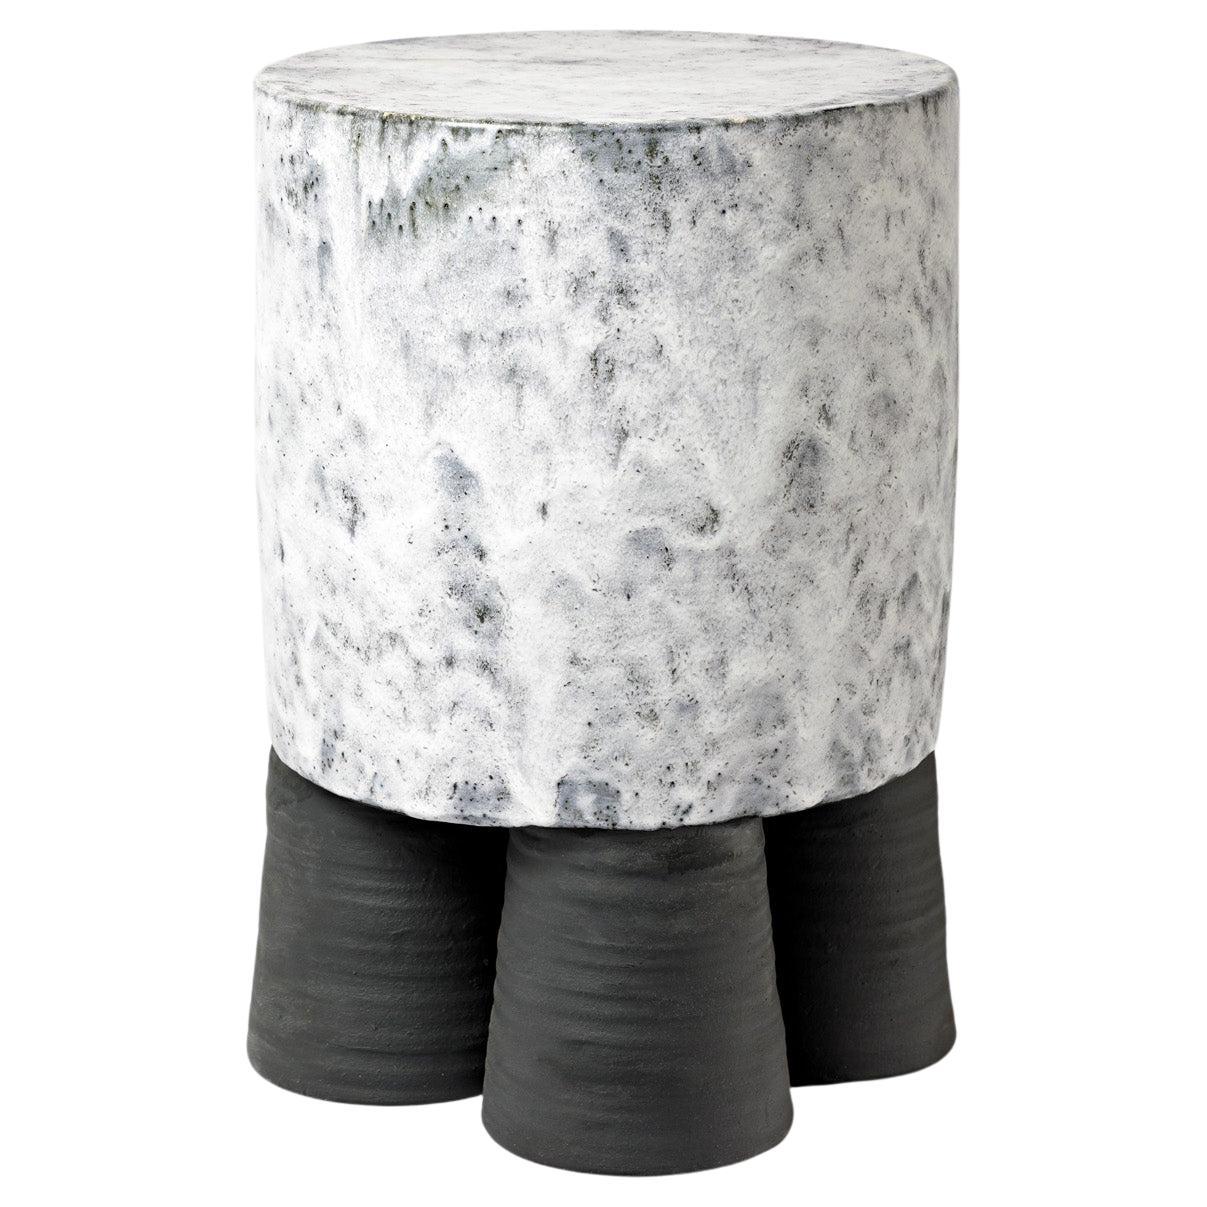 Ceramic Stool or Table with Glazes Decoration by Mia Jensen, circa 2022